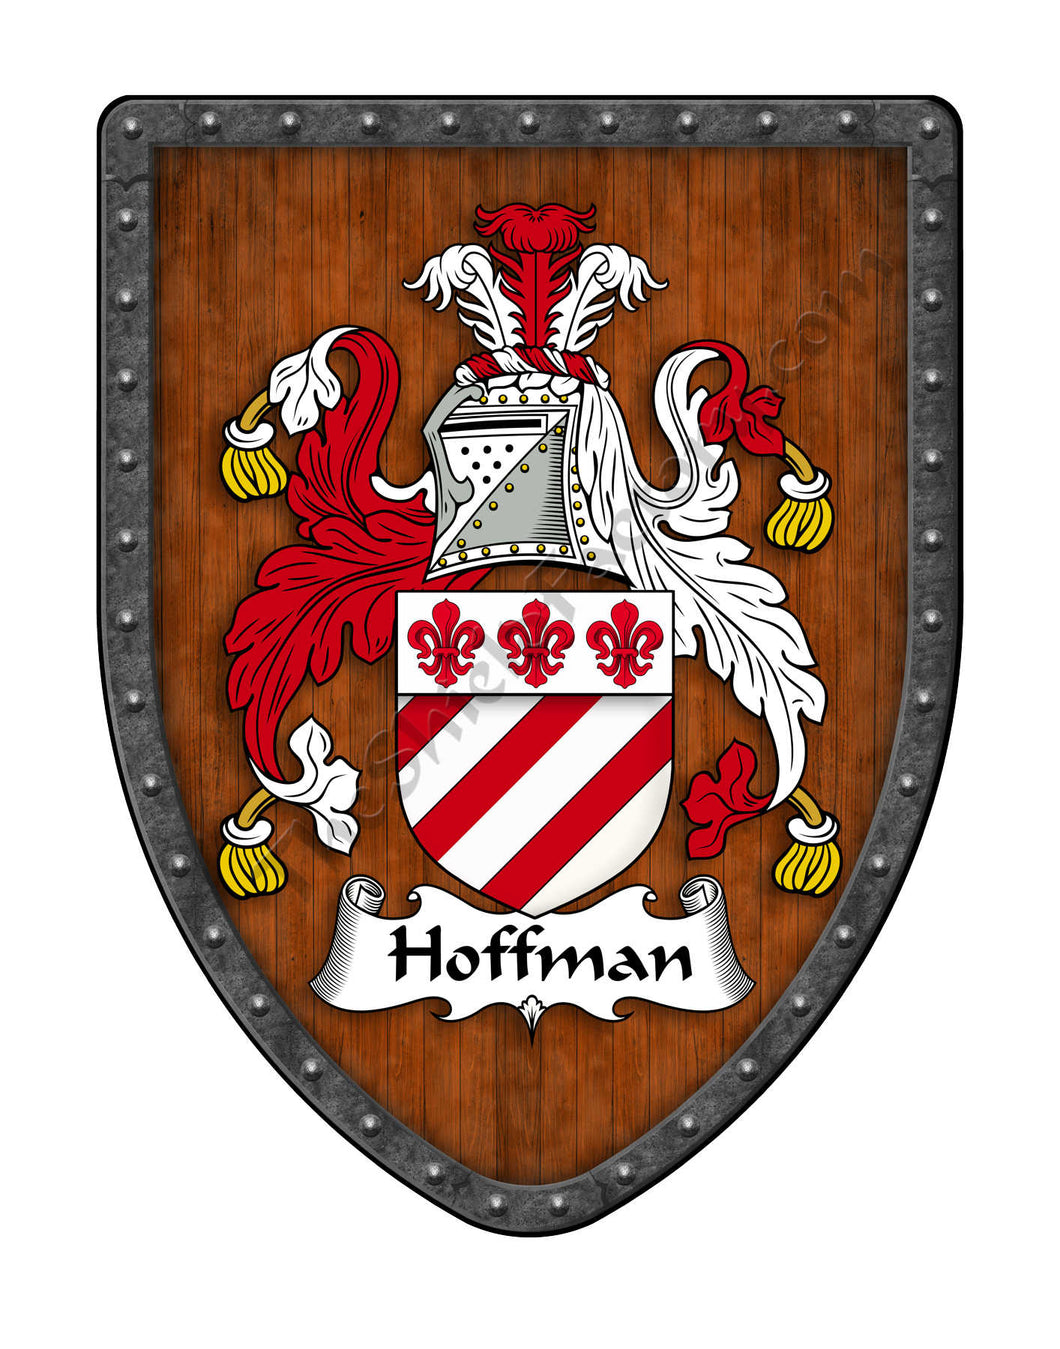 Hoffman Coat of Arms